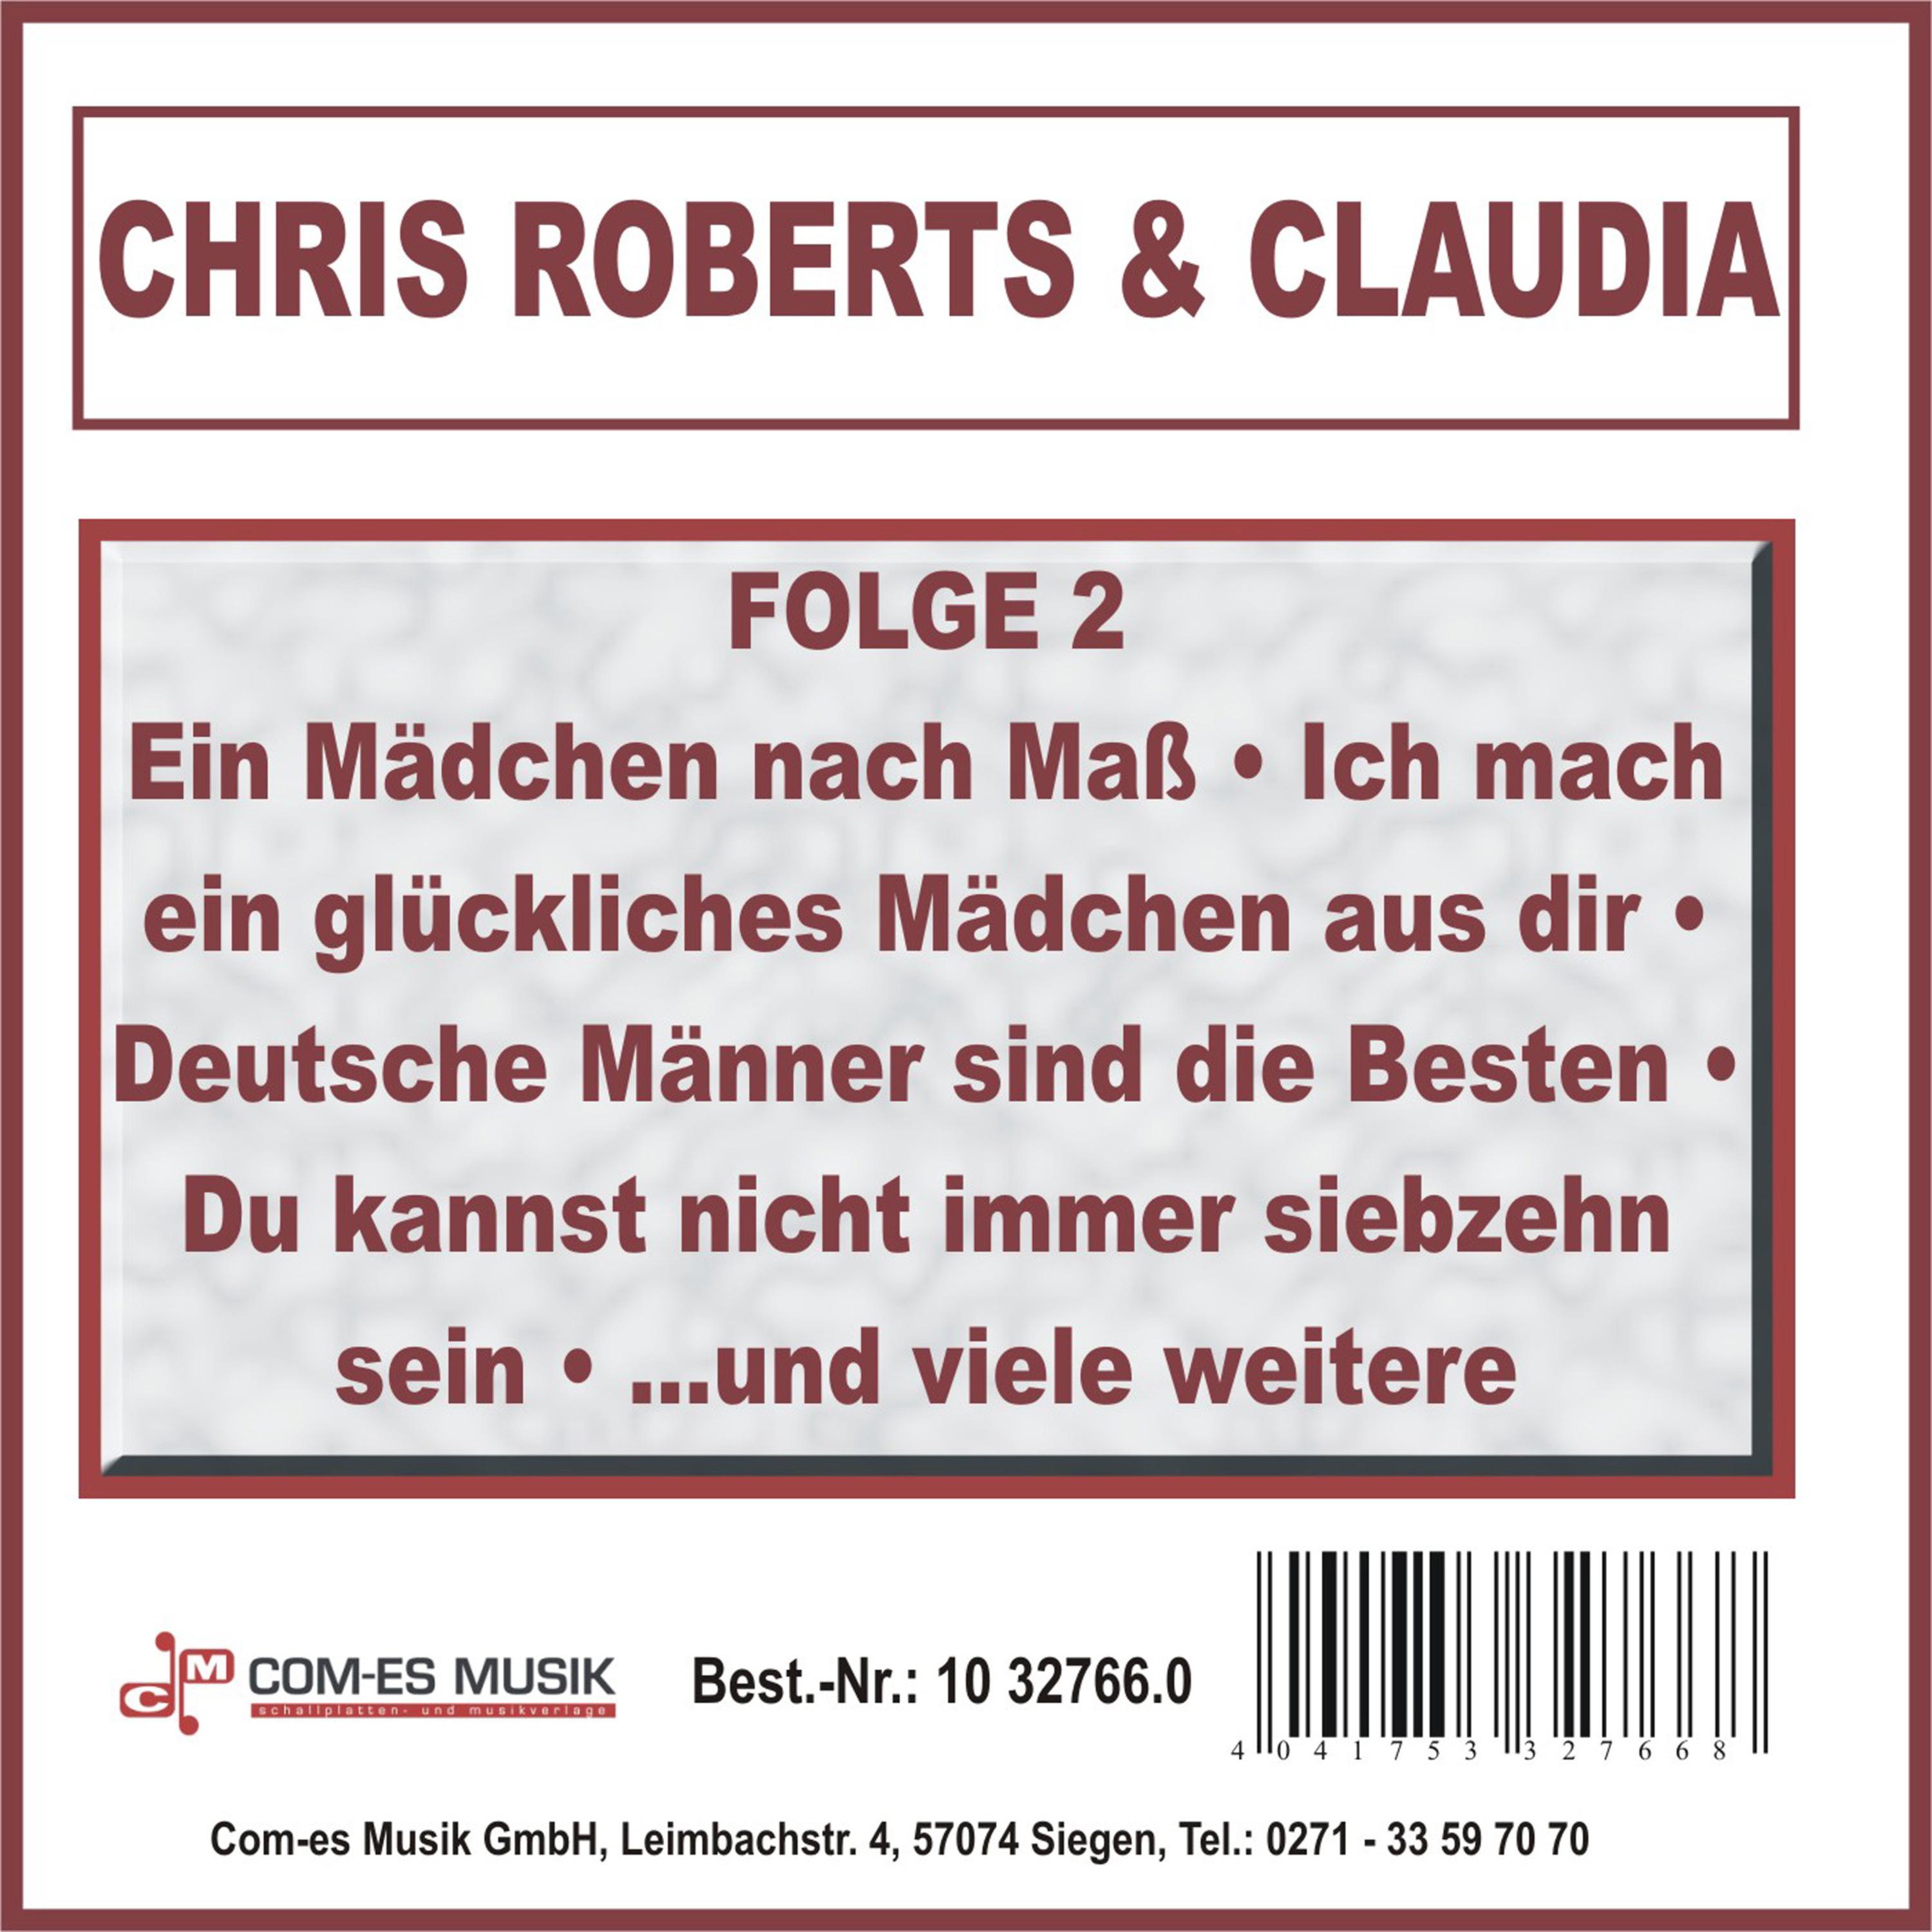 Chris Roberts & Claudia, Folge 2